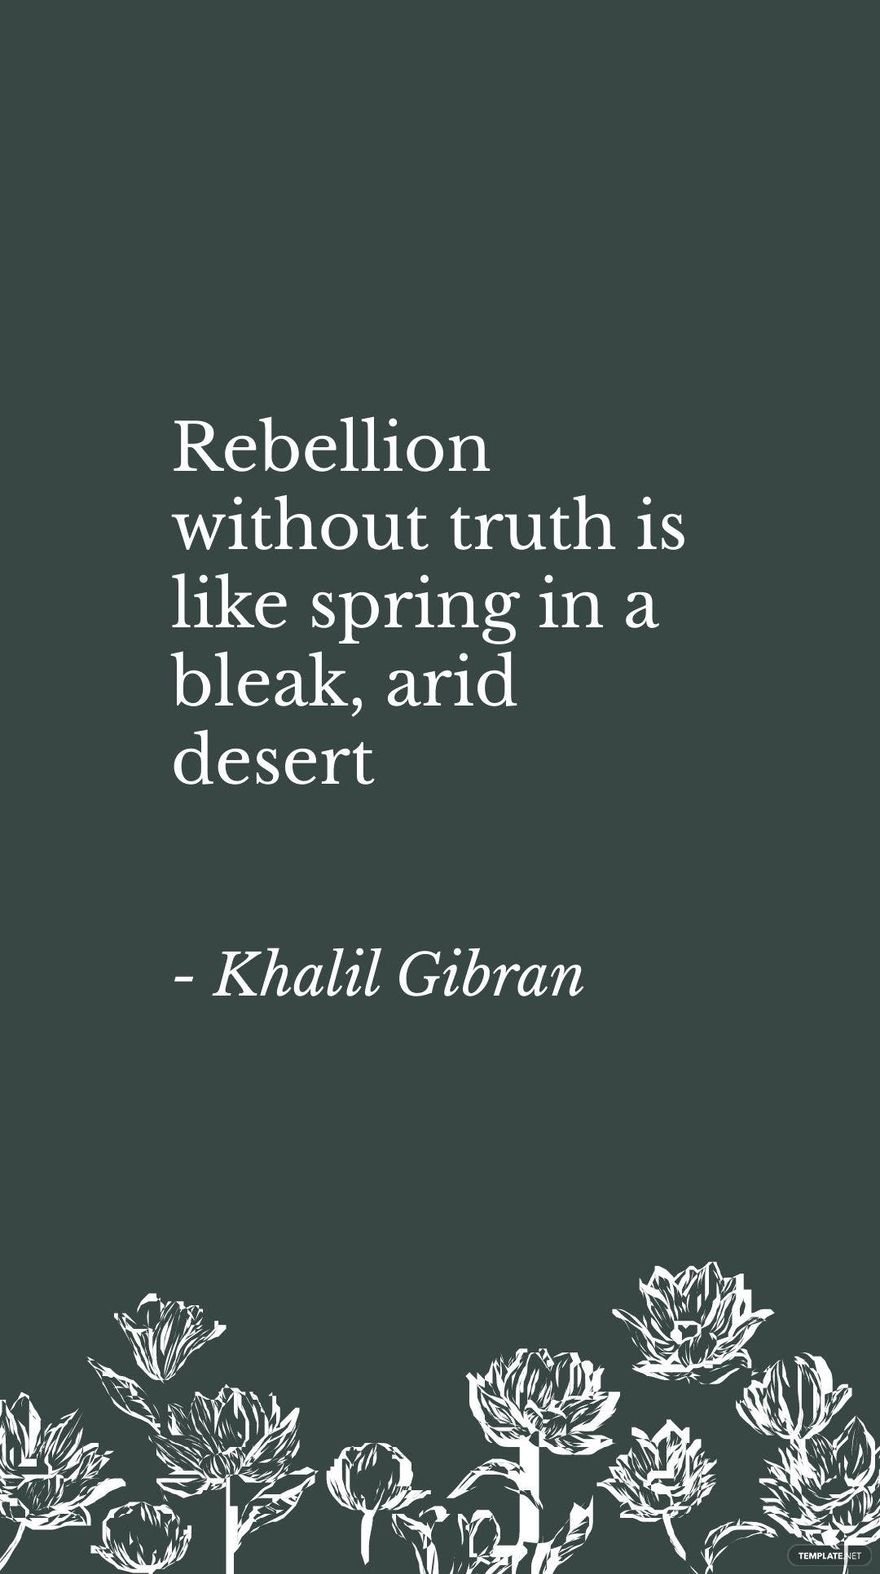 Khalil Gibran - Rebellion without truth is like spring in a bleak, arid desert